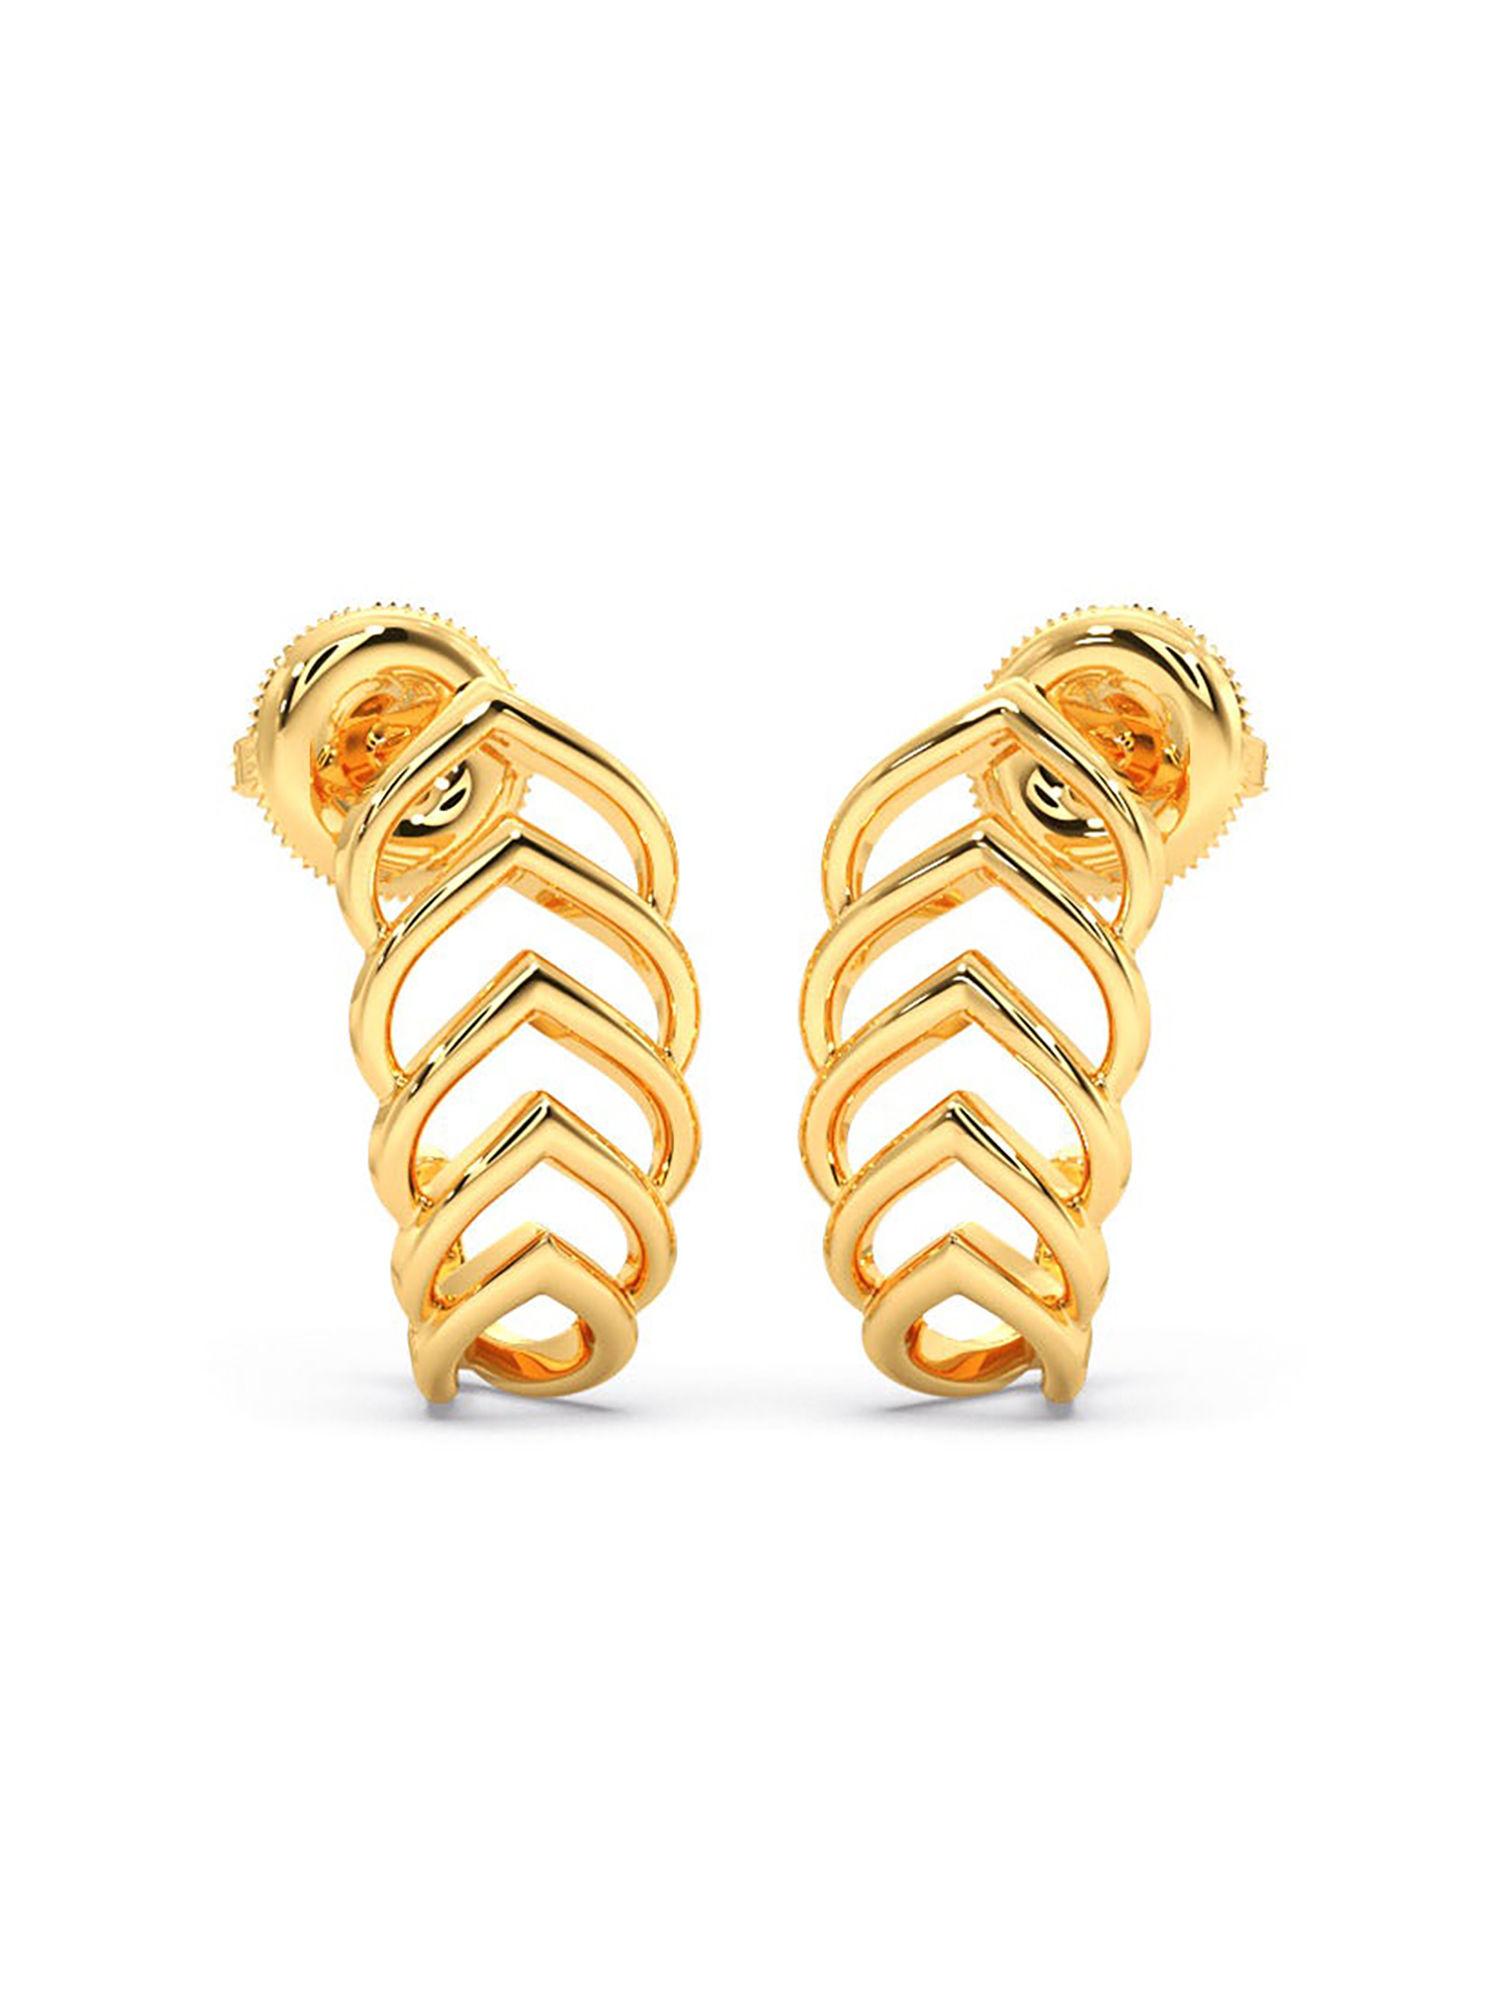 18k (750) bis hallmark yellow gold bali earring for women